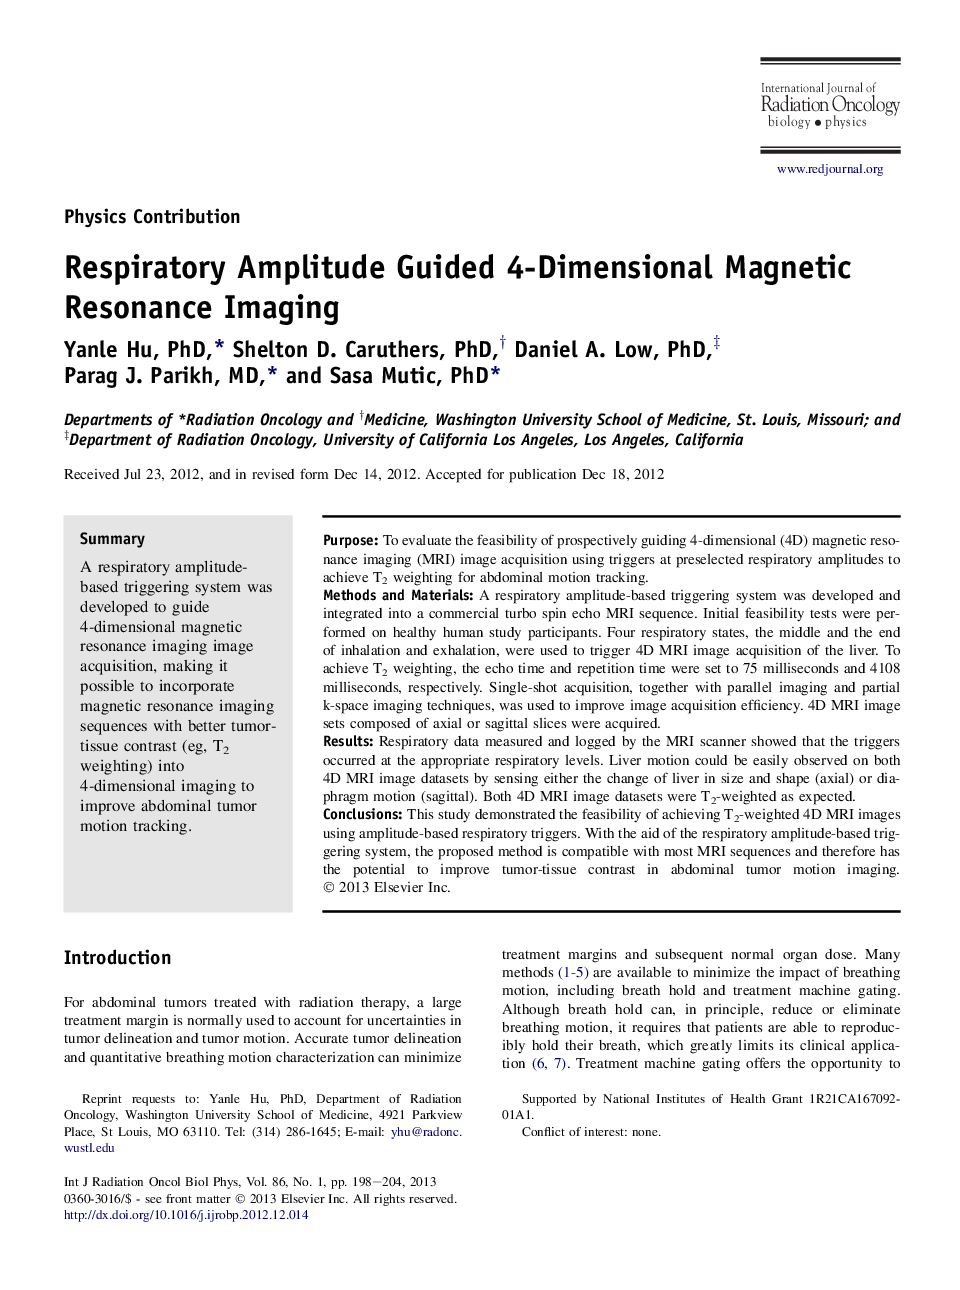 Respiratory Amplitude Guided 4-Dimensional Magnetic Resonance Imaging